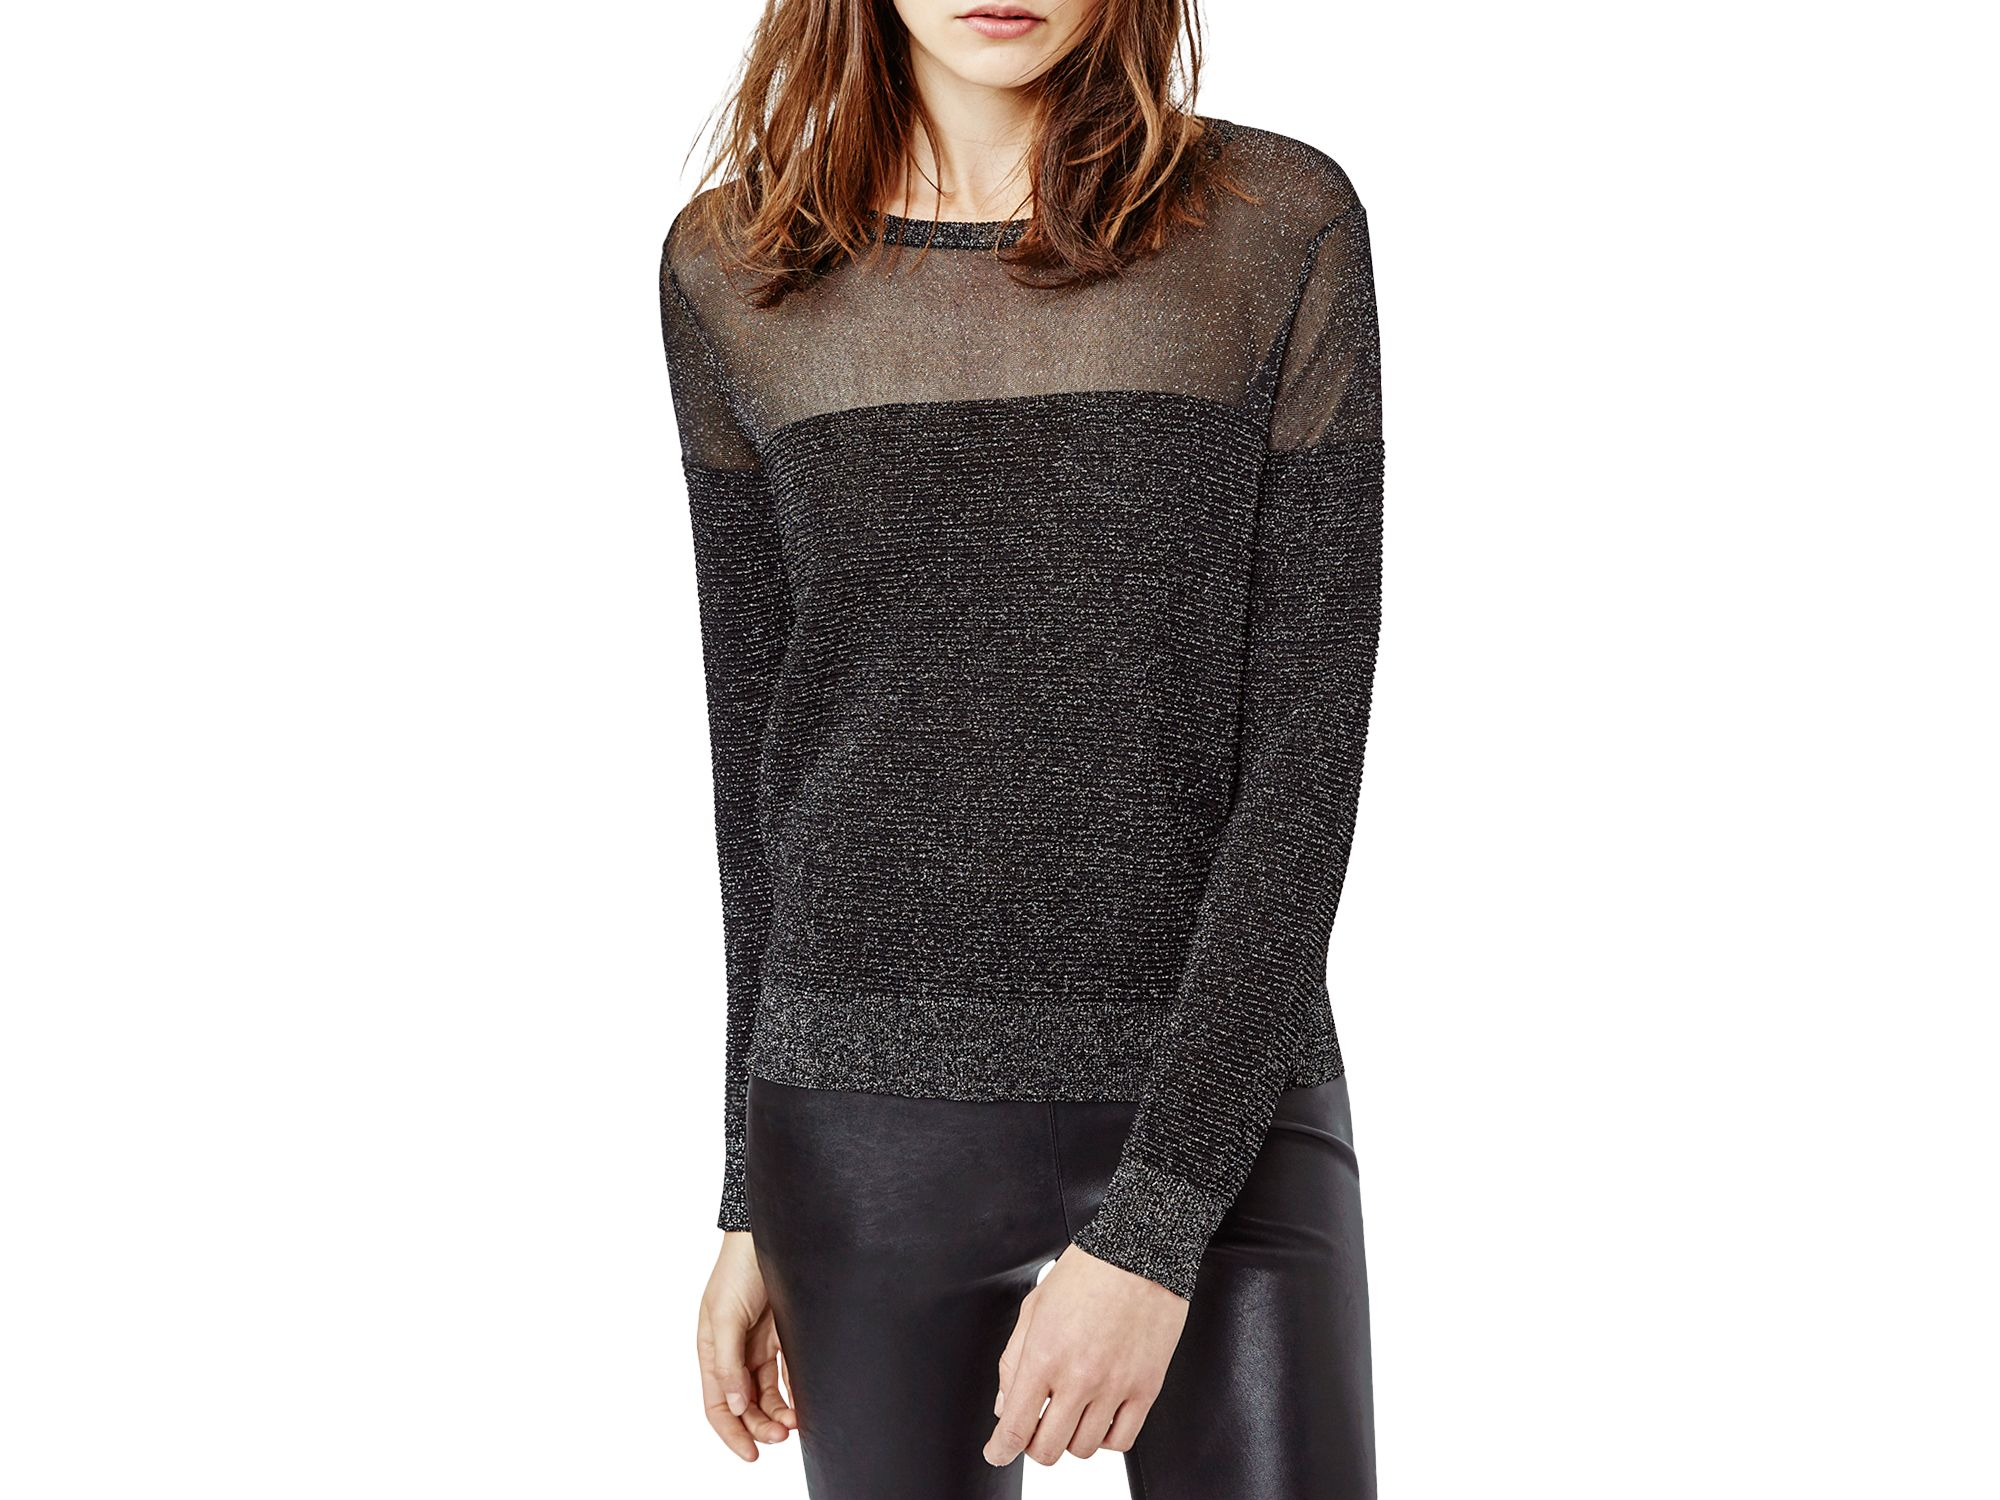 Lyst - Maje Moulin Sheer Shimmer Sweater in Black